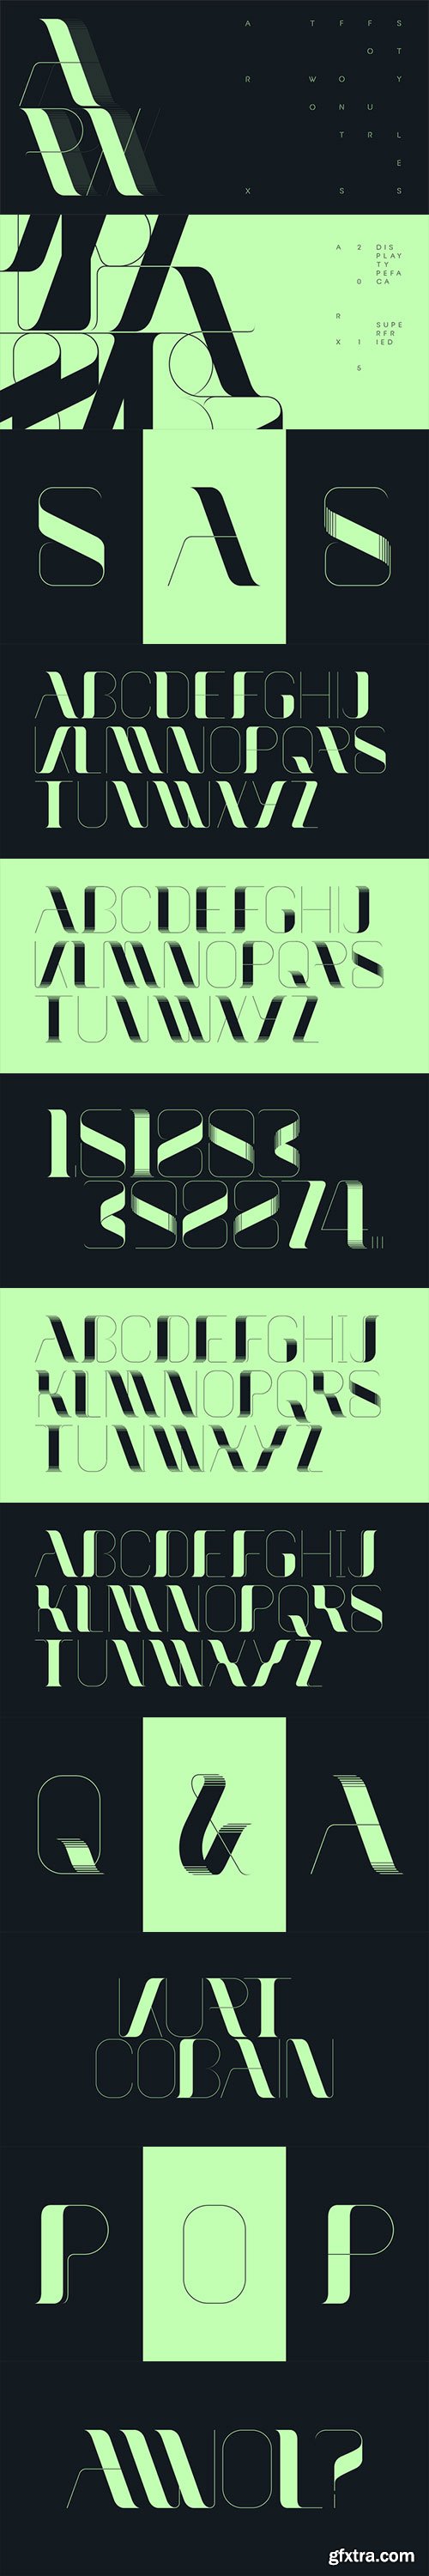 Arx - Elegant & Intricate Display Typeface 2xOTF $41